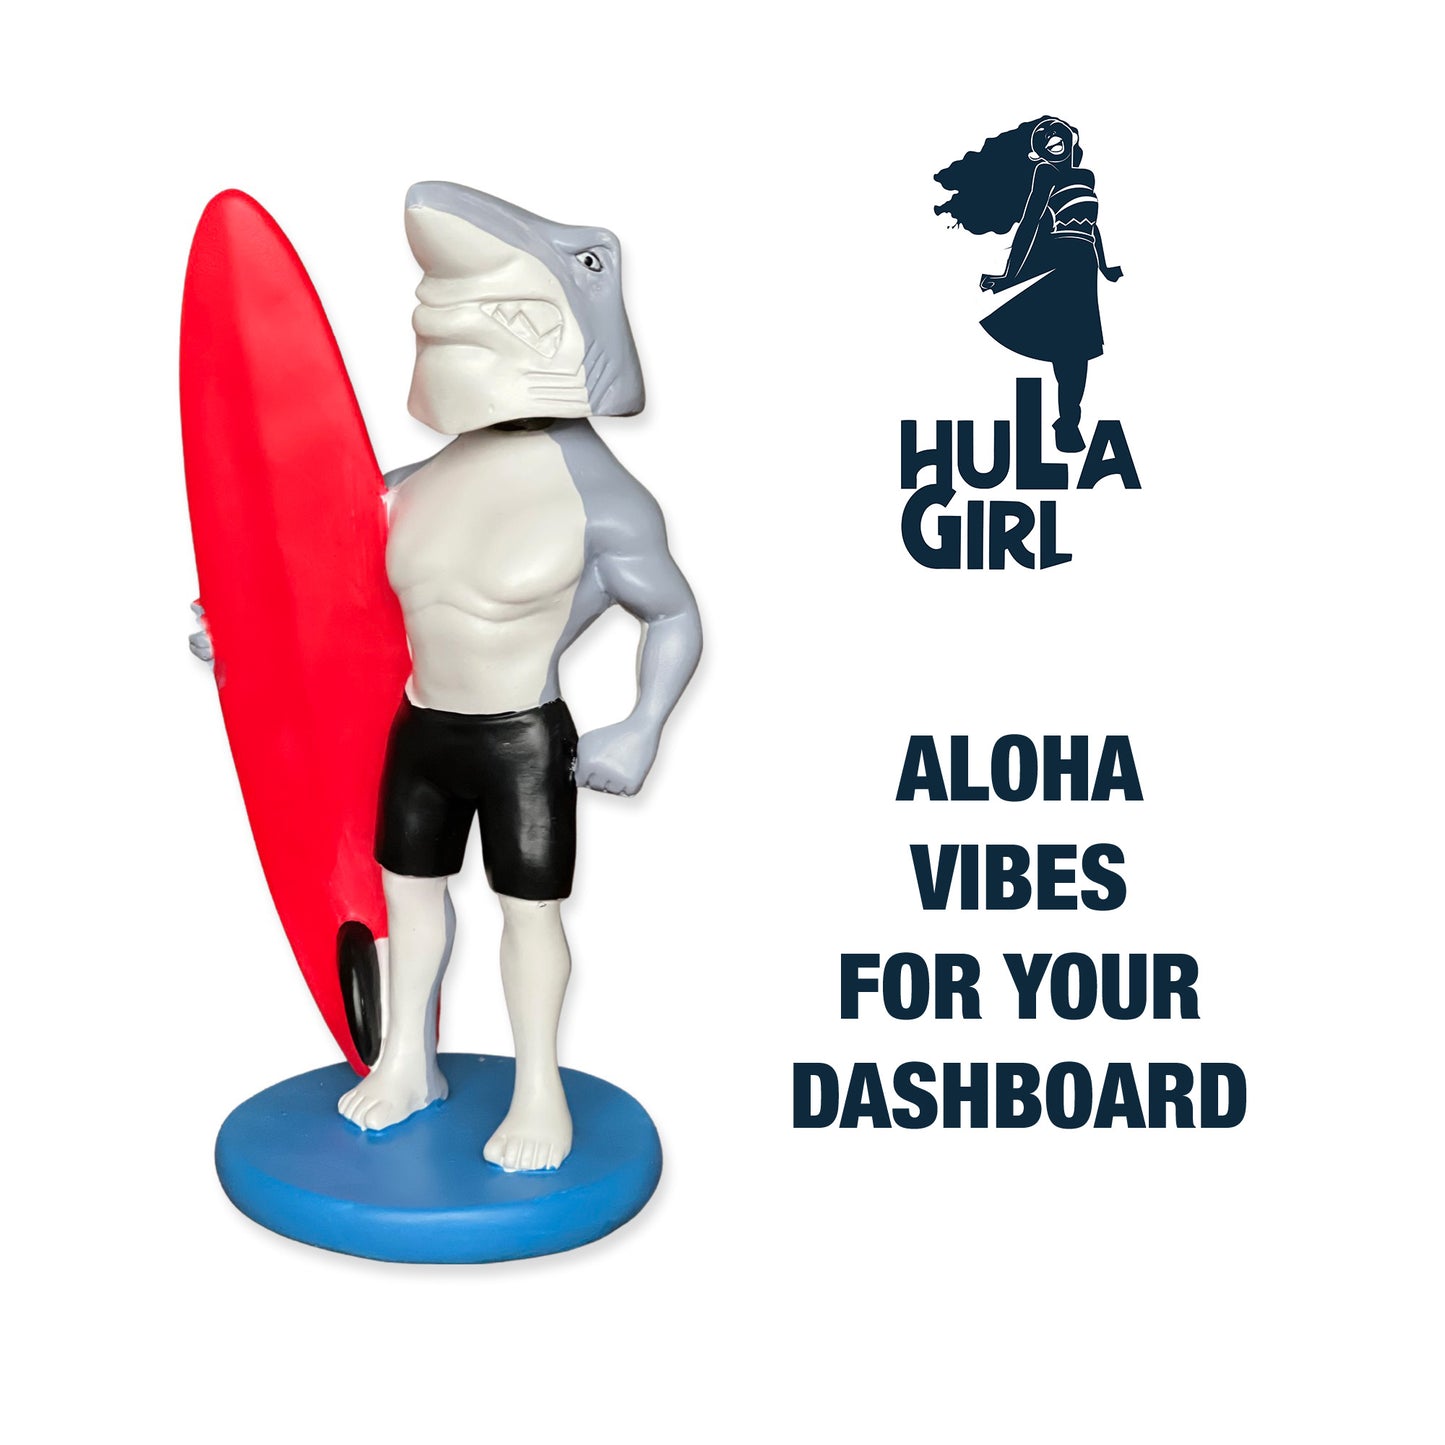 Hawaiian Shark from Hula Girl - Aloha vibes for your dashboard